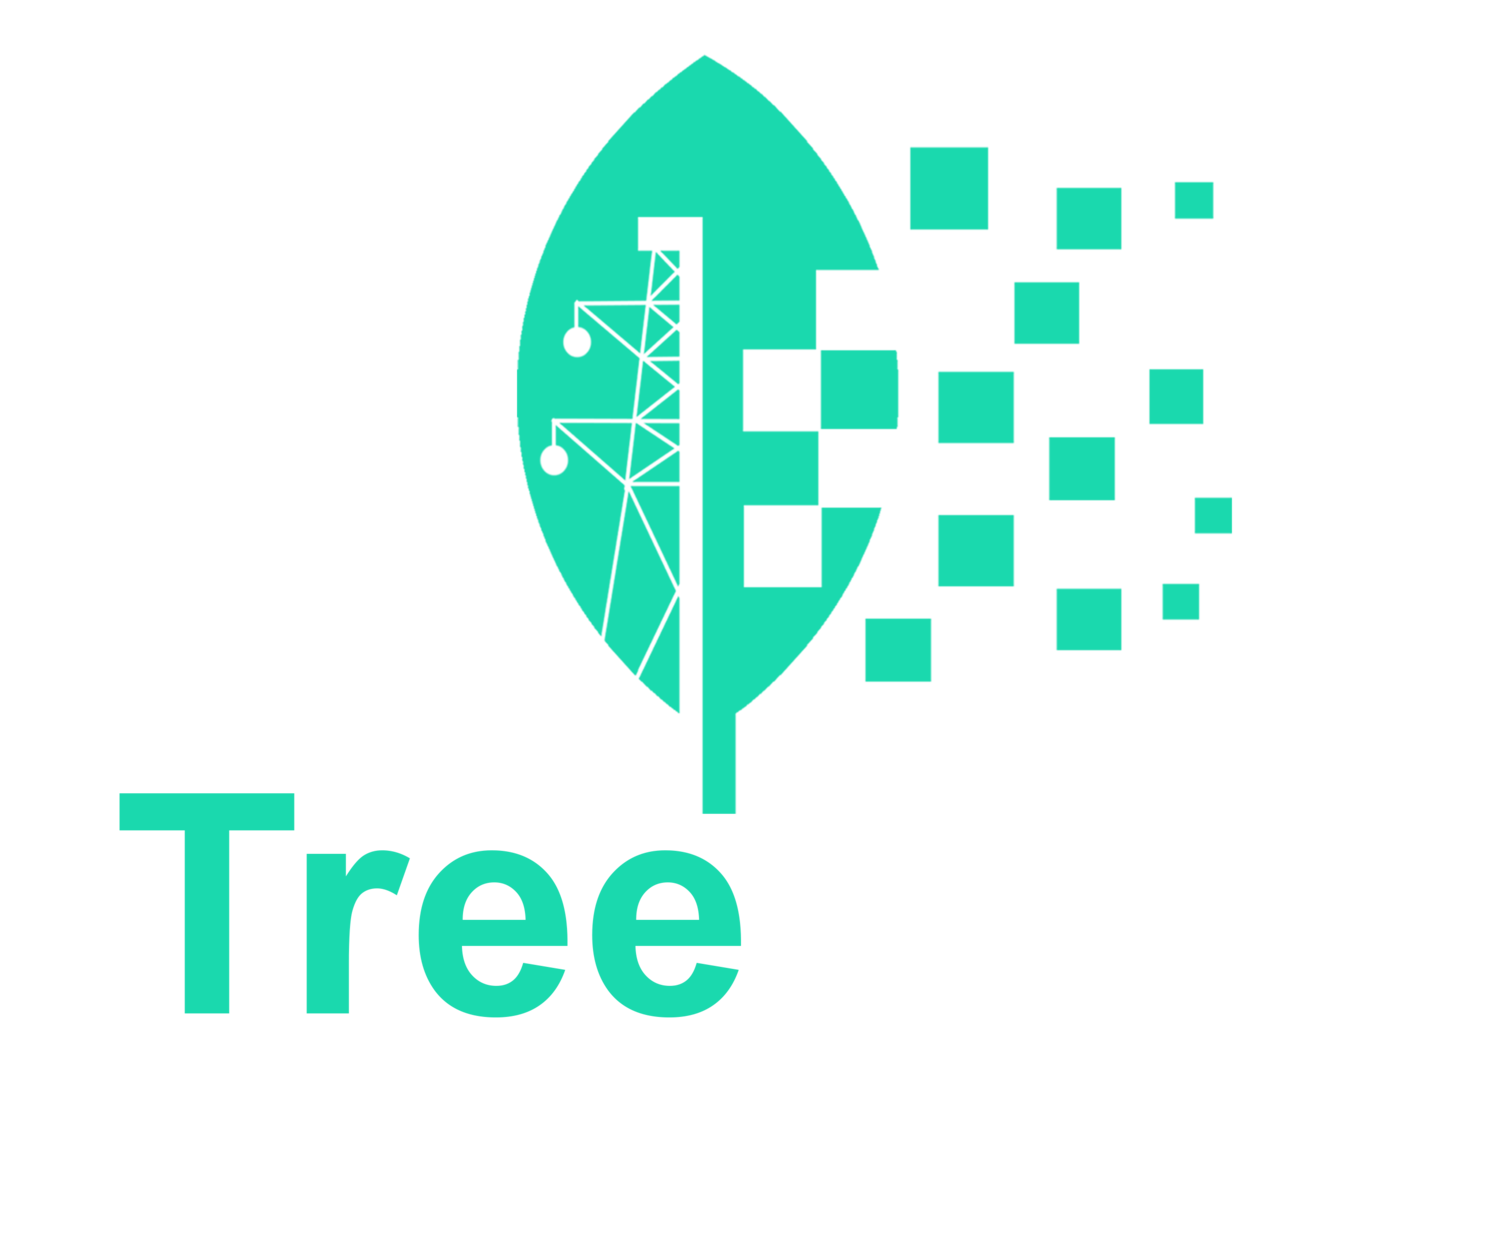 TreeLine Utility Solutions Inc.